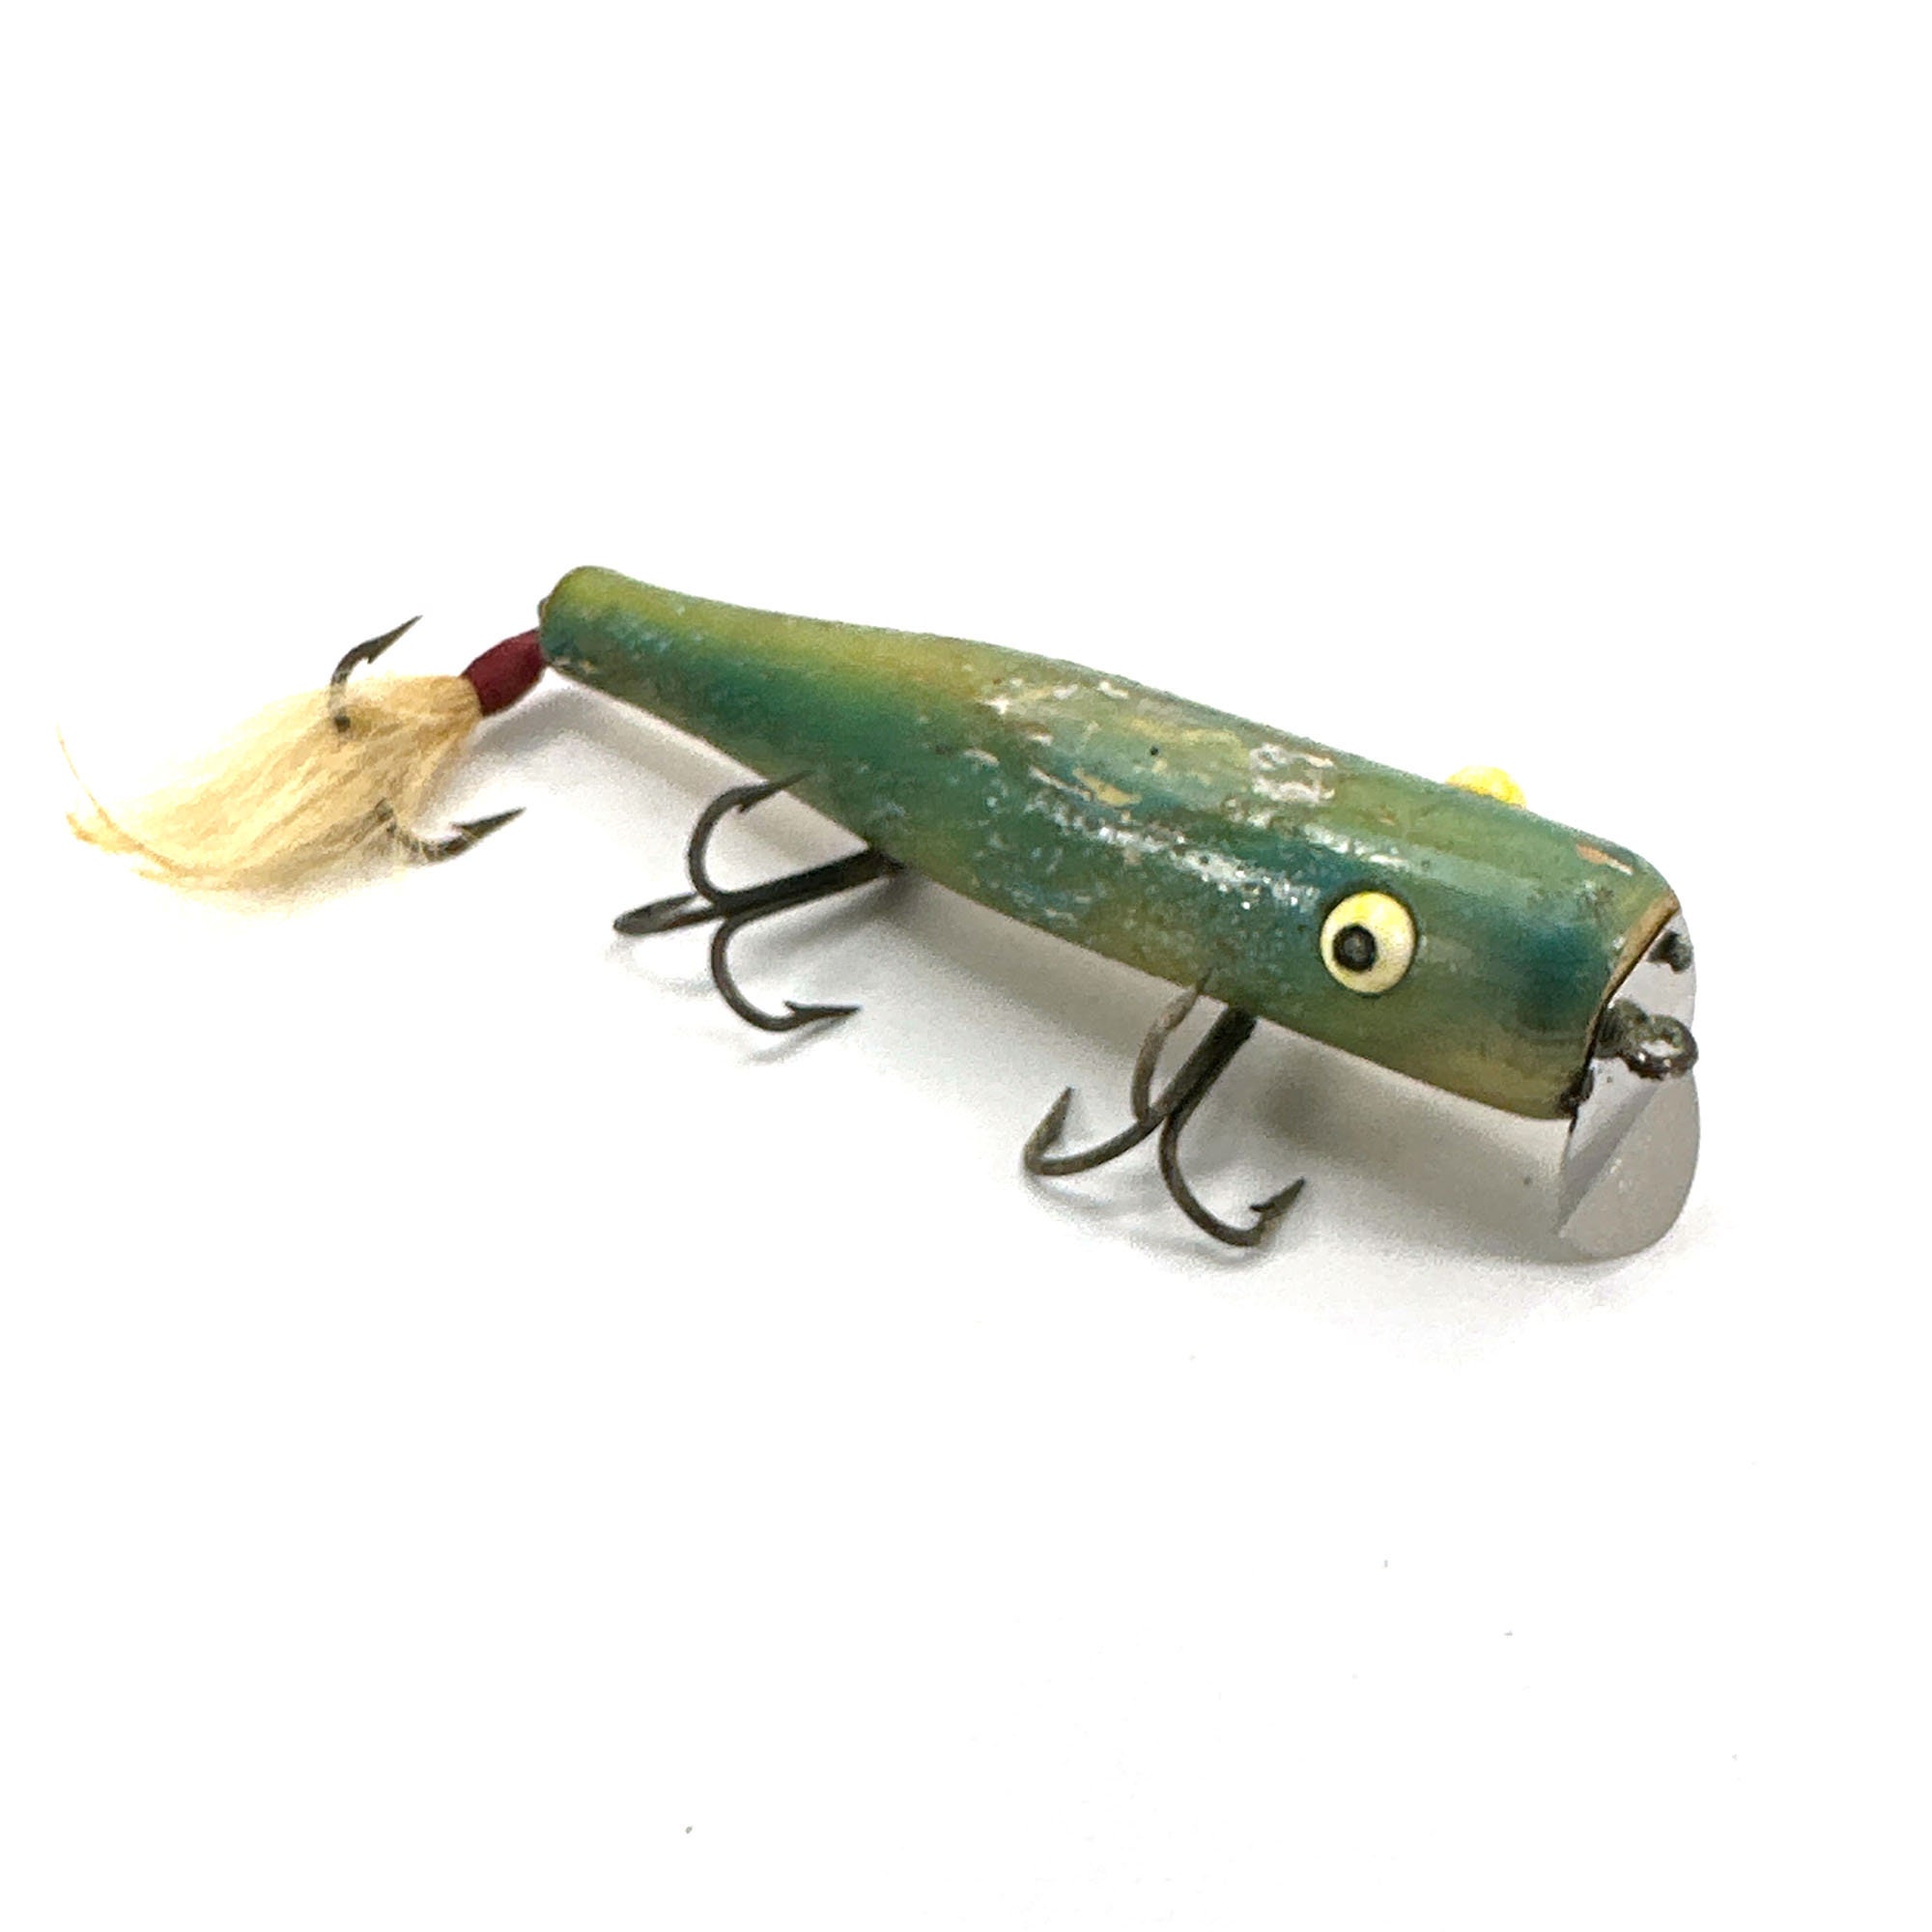 Vintage Goo Goo Eyes Fishing Lure L Cooper Co Stamford Conn Saltwater  Wooden Green Orange Tail 1950's 